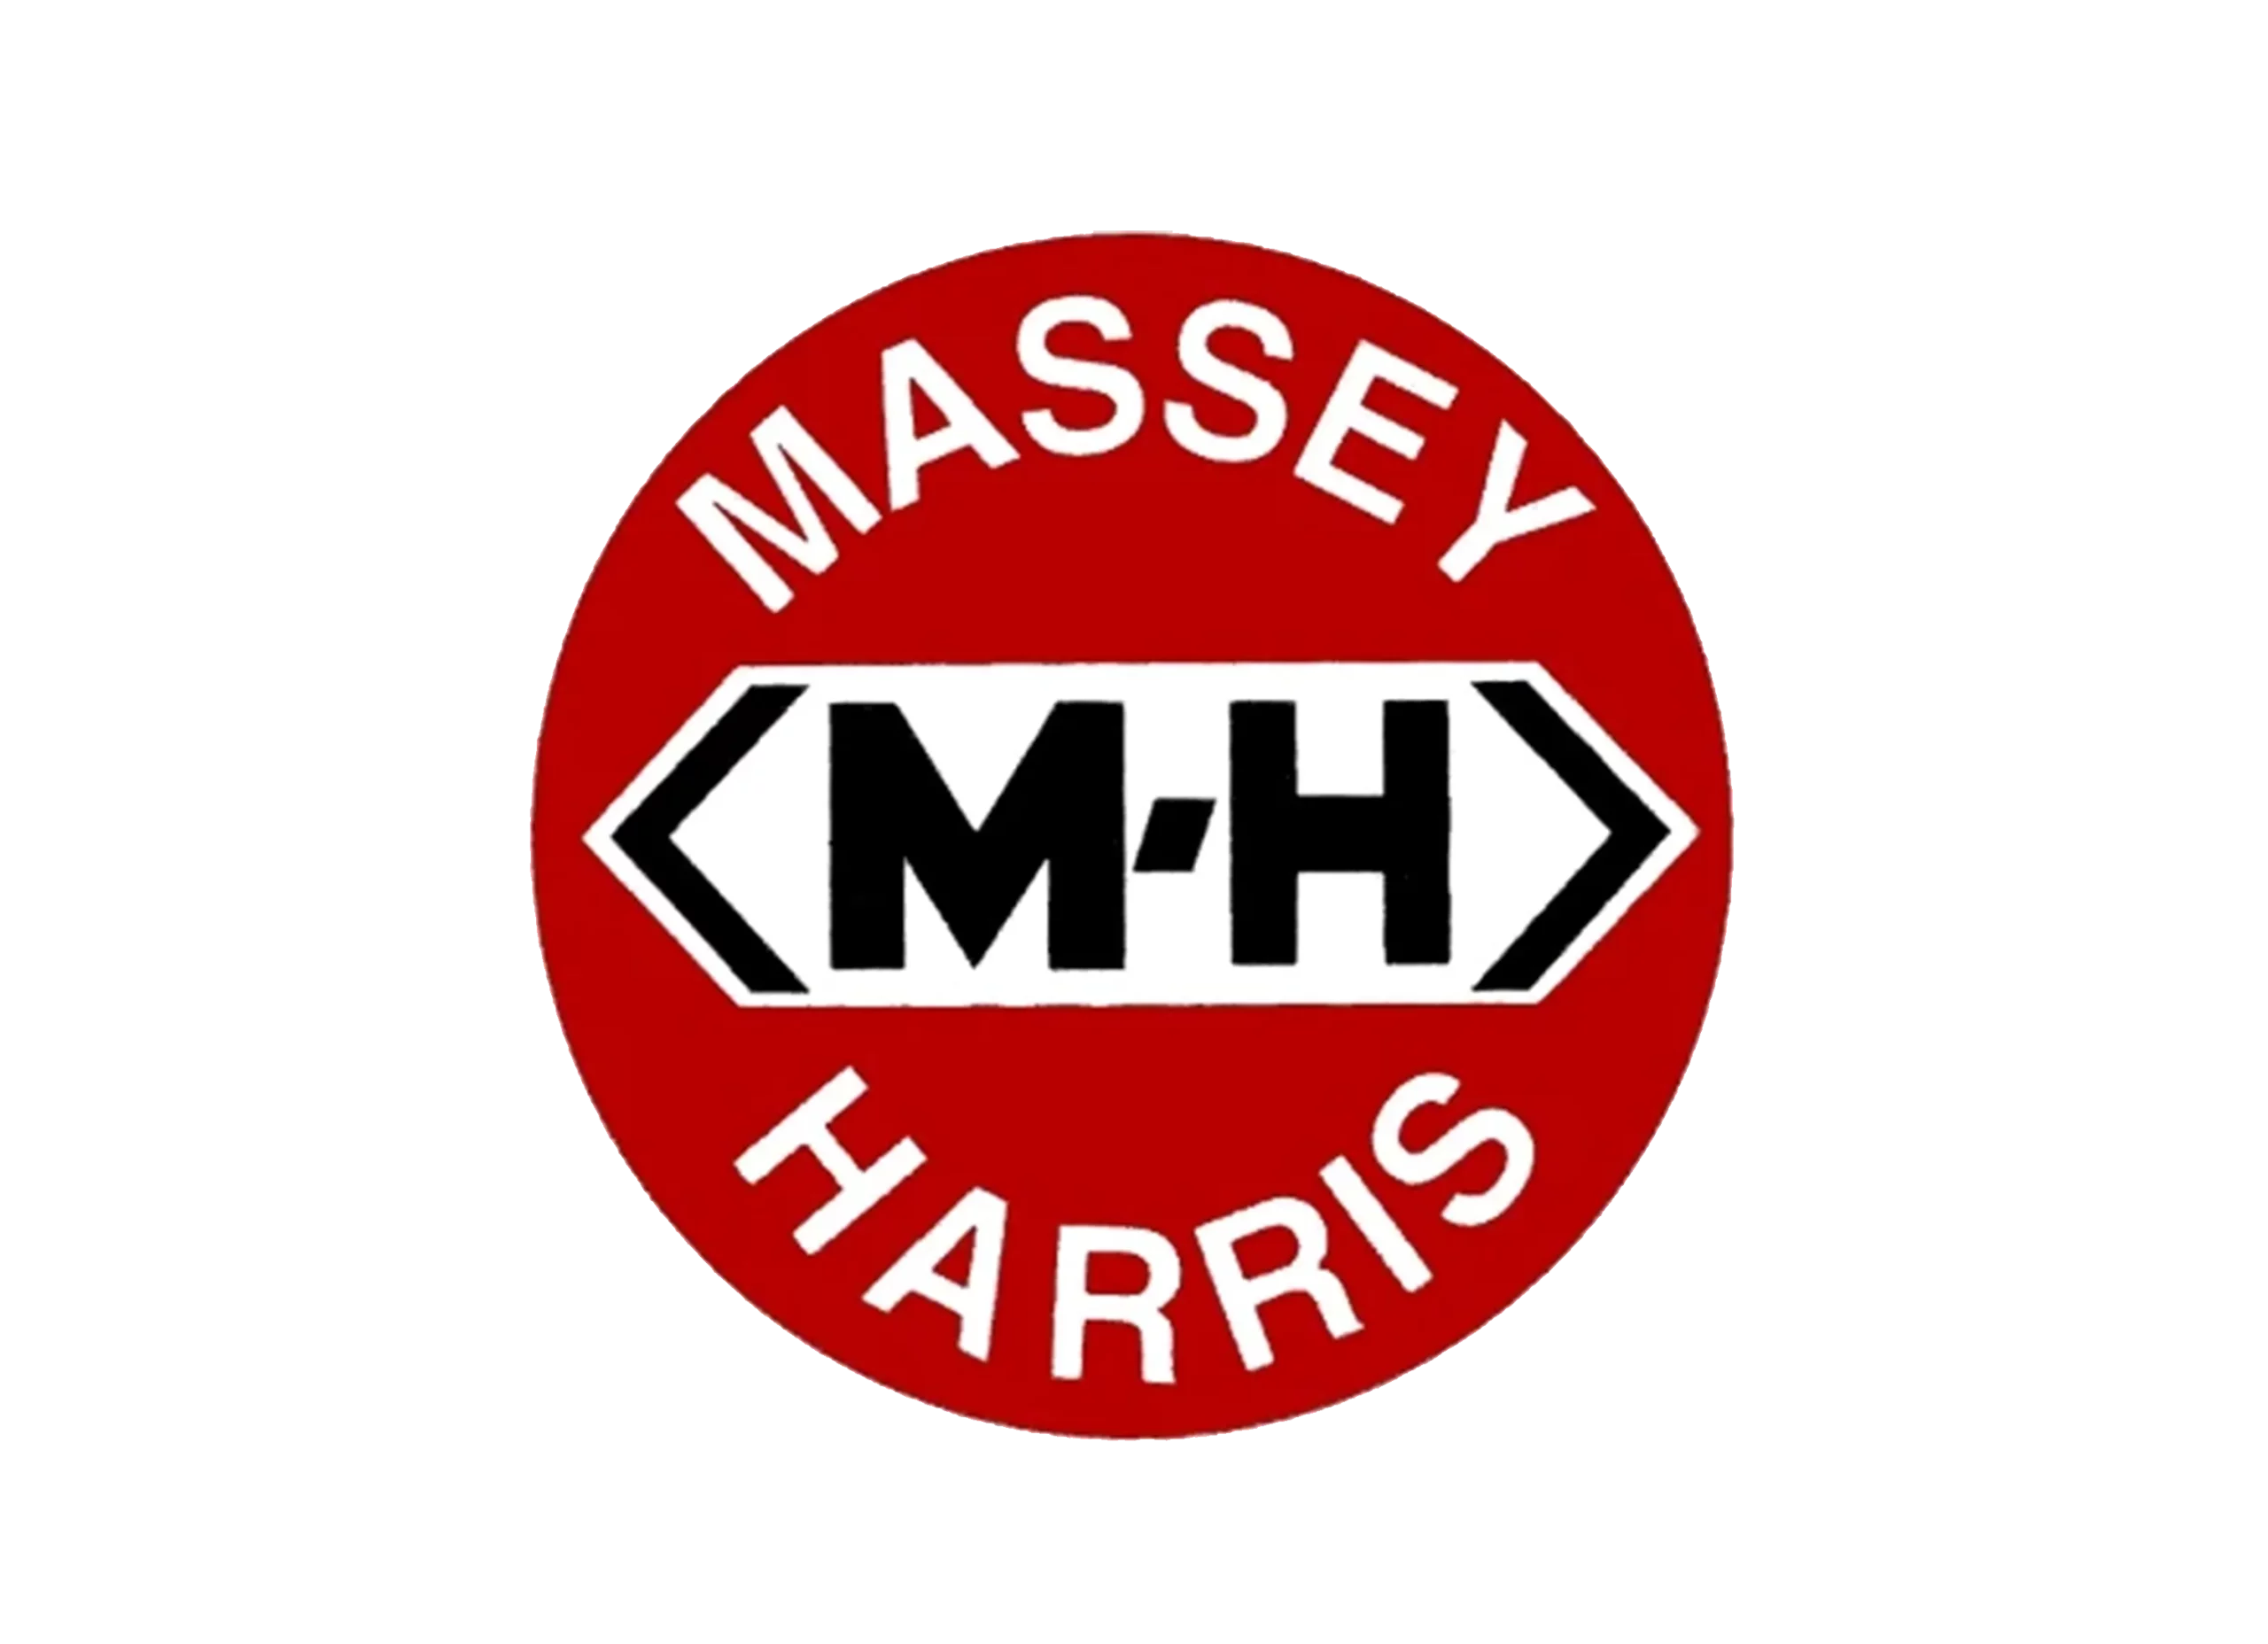 Massey Ferguson 1952 emblem